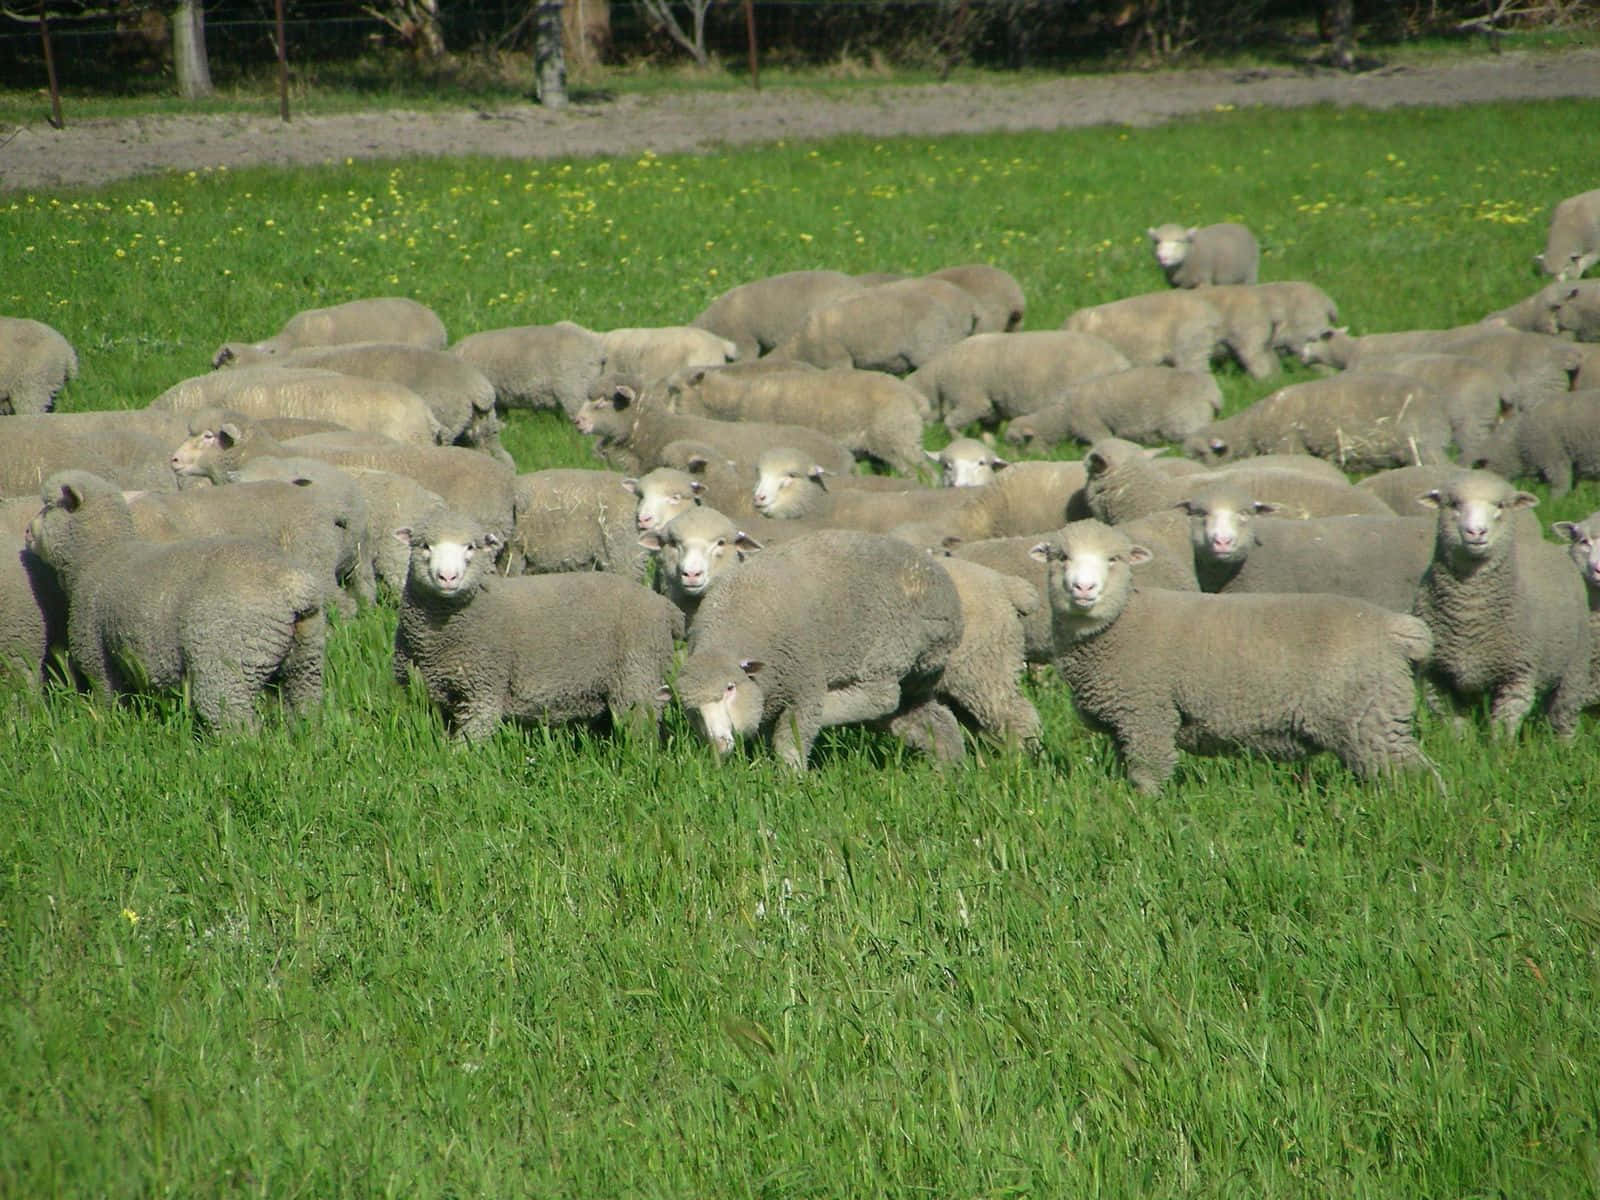 Adorable Lamb Grazing in Vibrant Green Field